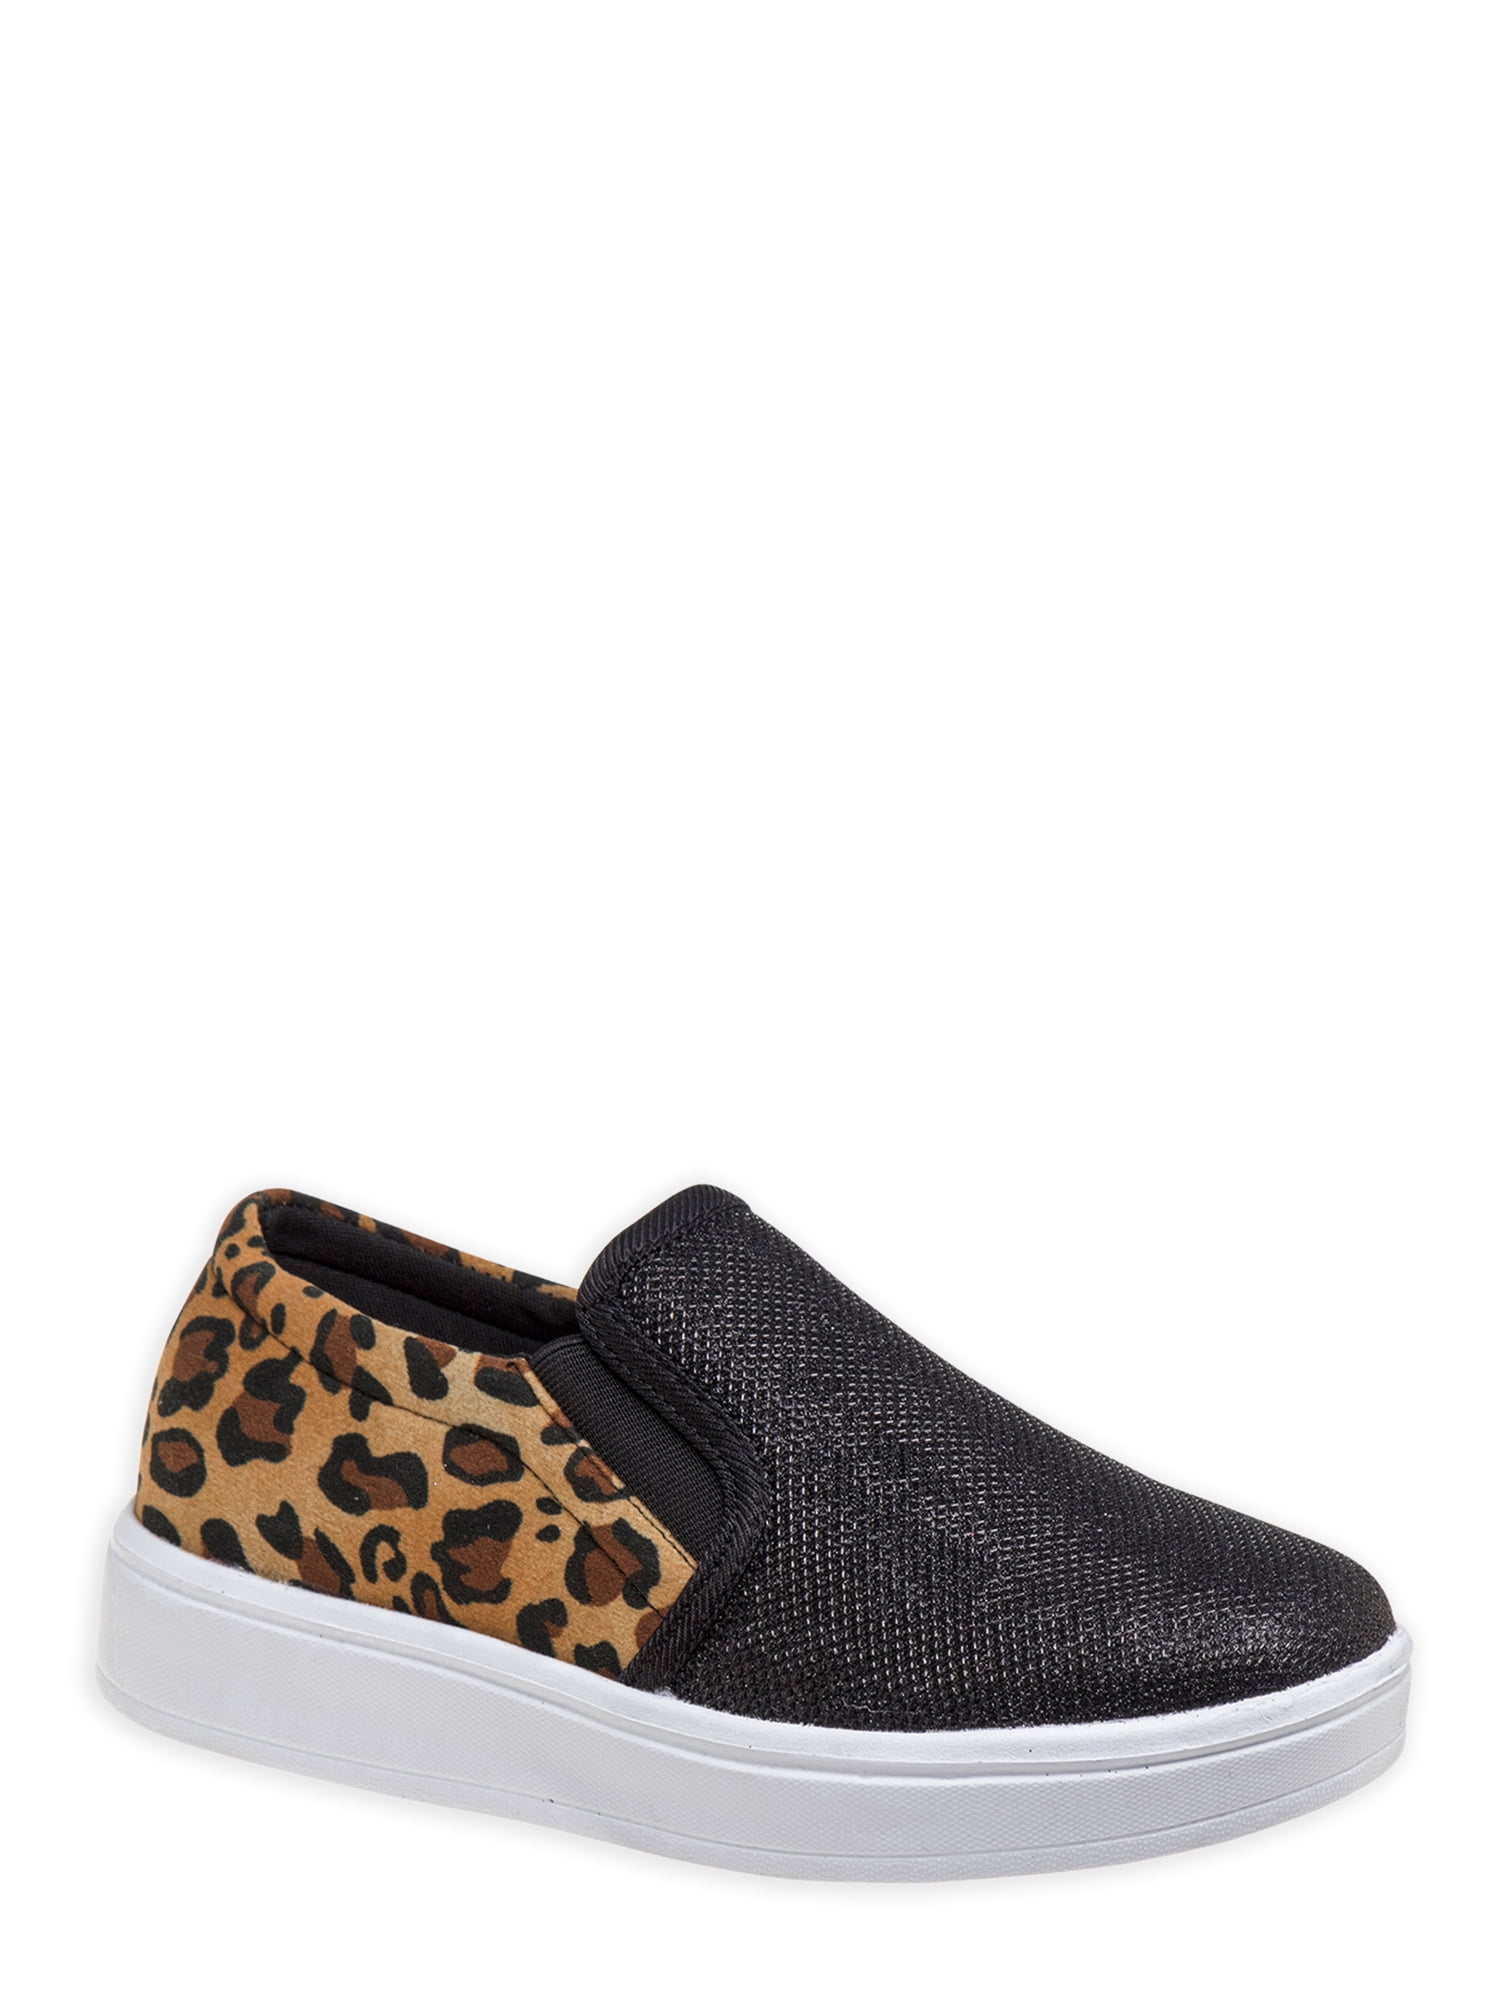 leopard toddler shoes